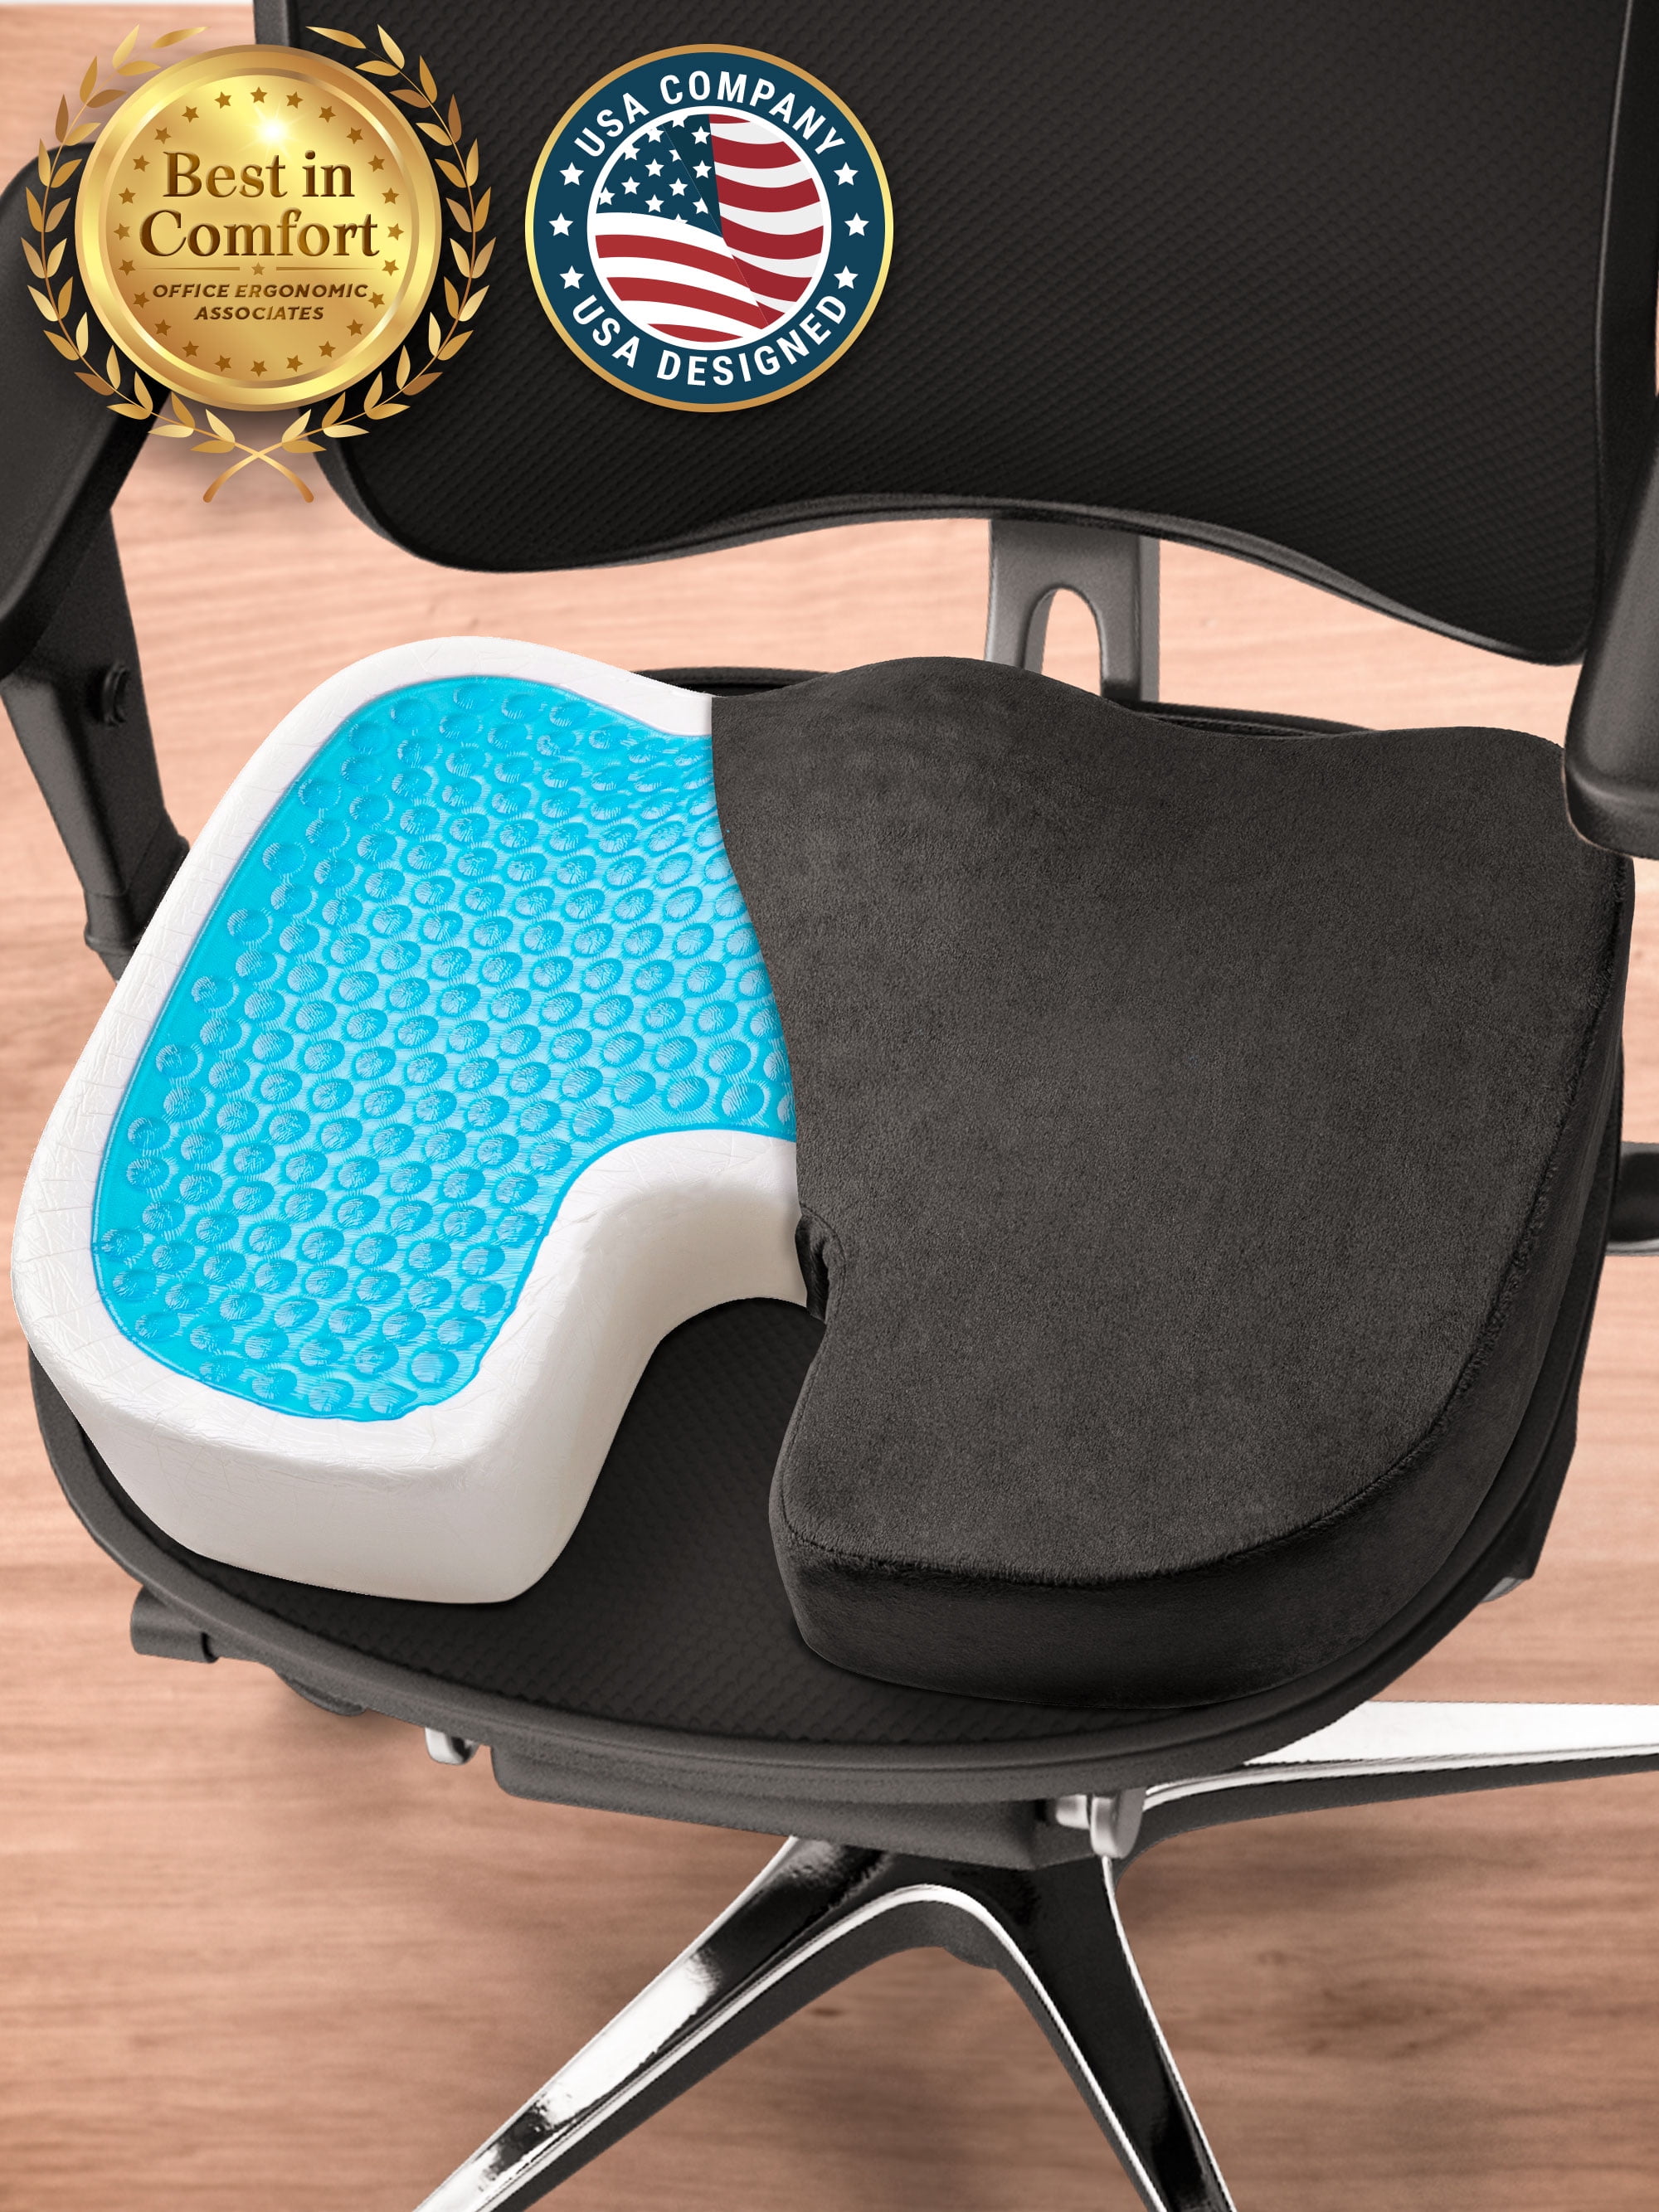 Rebound Memory Foam Chair Cushion for Women, Tailbone, Pelvis